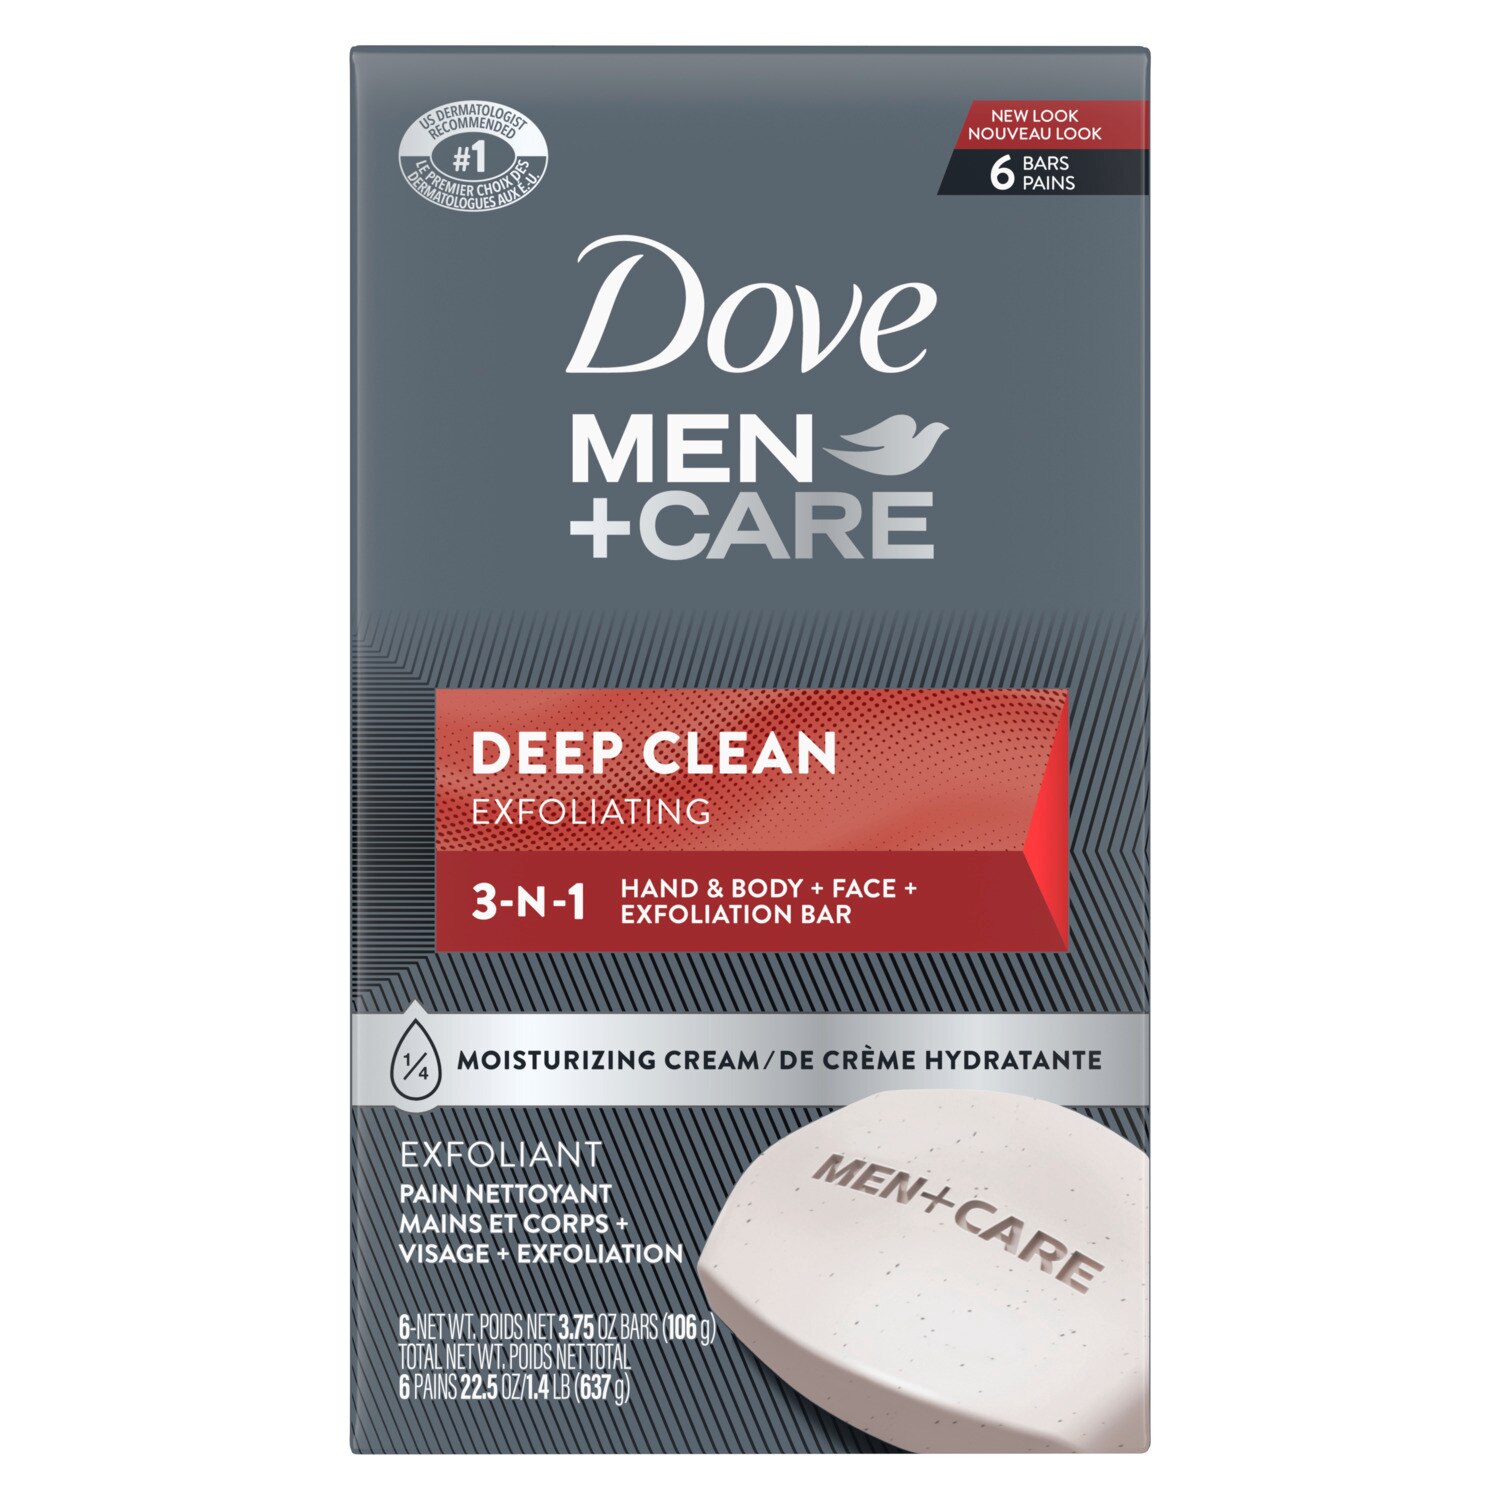 Dove Men+Care, Skin Nourishing, Deep Clean Body Soap And Face Bar More Moisturizing Than Bar Soap, 3.75 OZ, 6 Bars , CVS